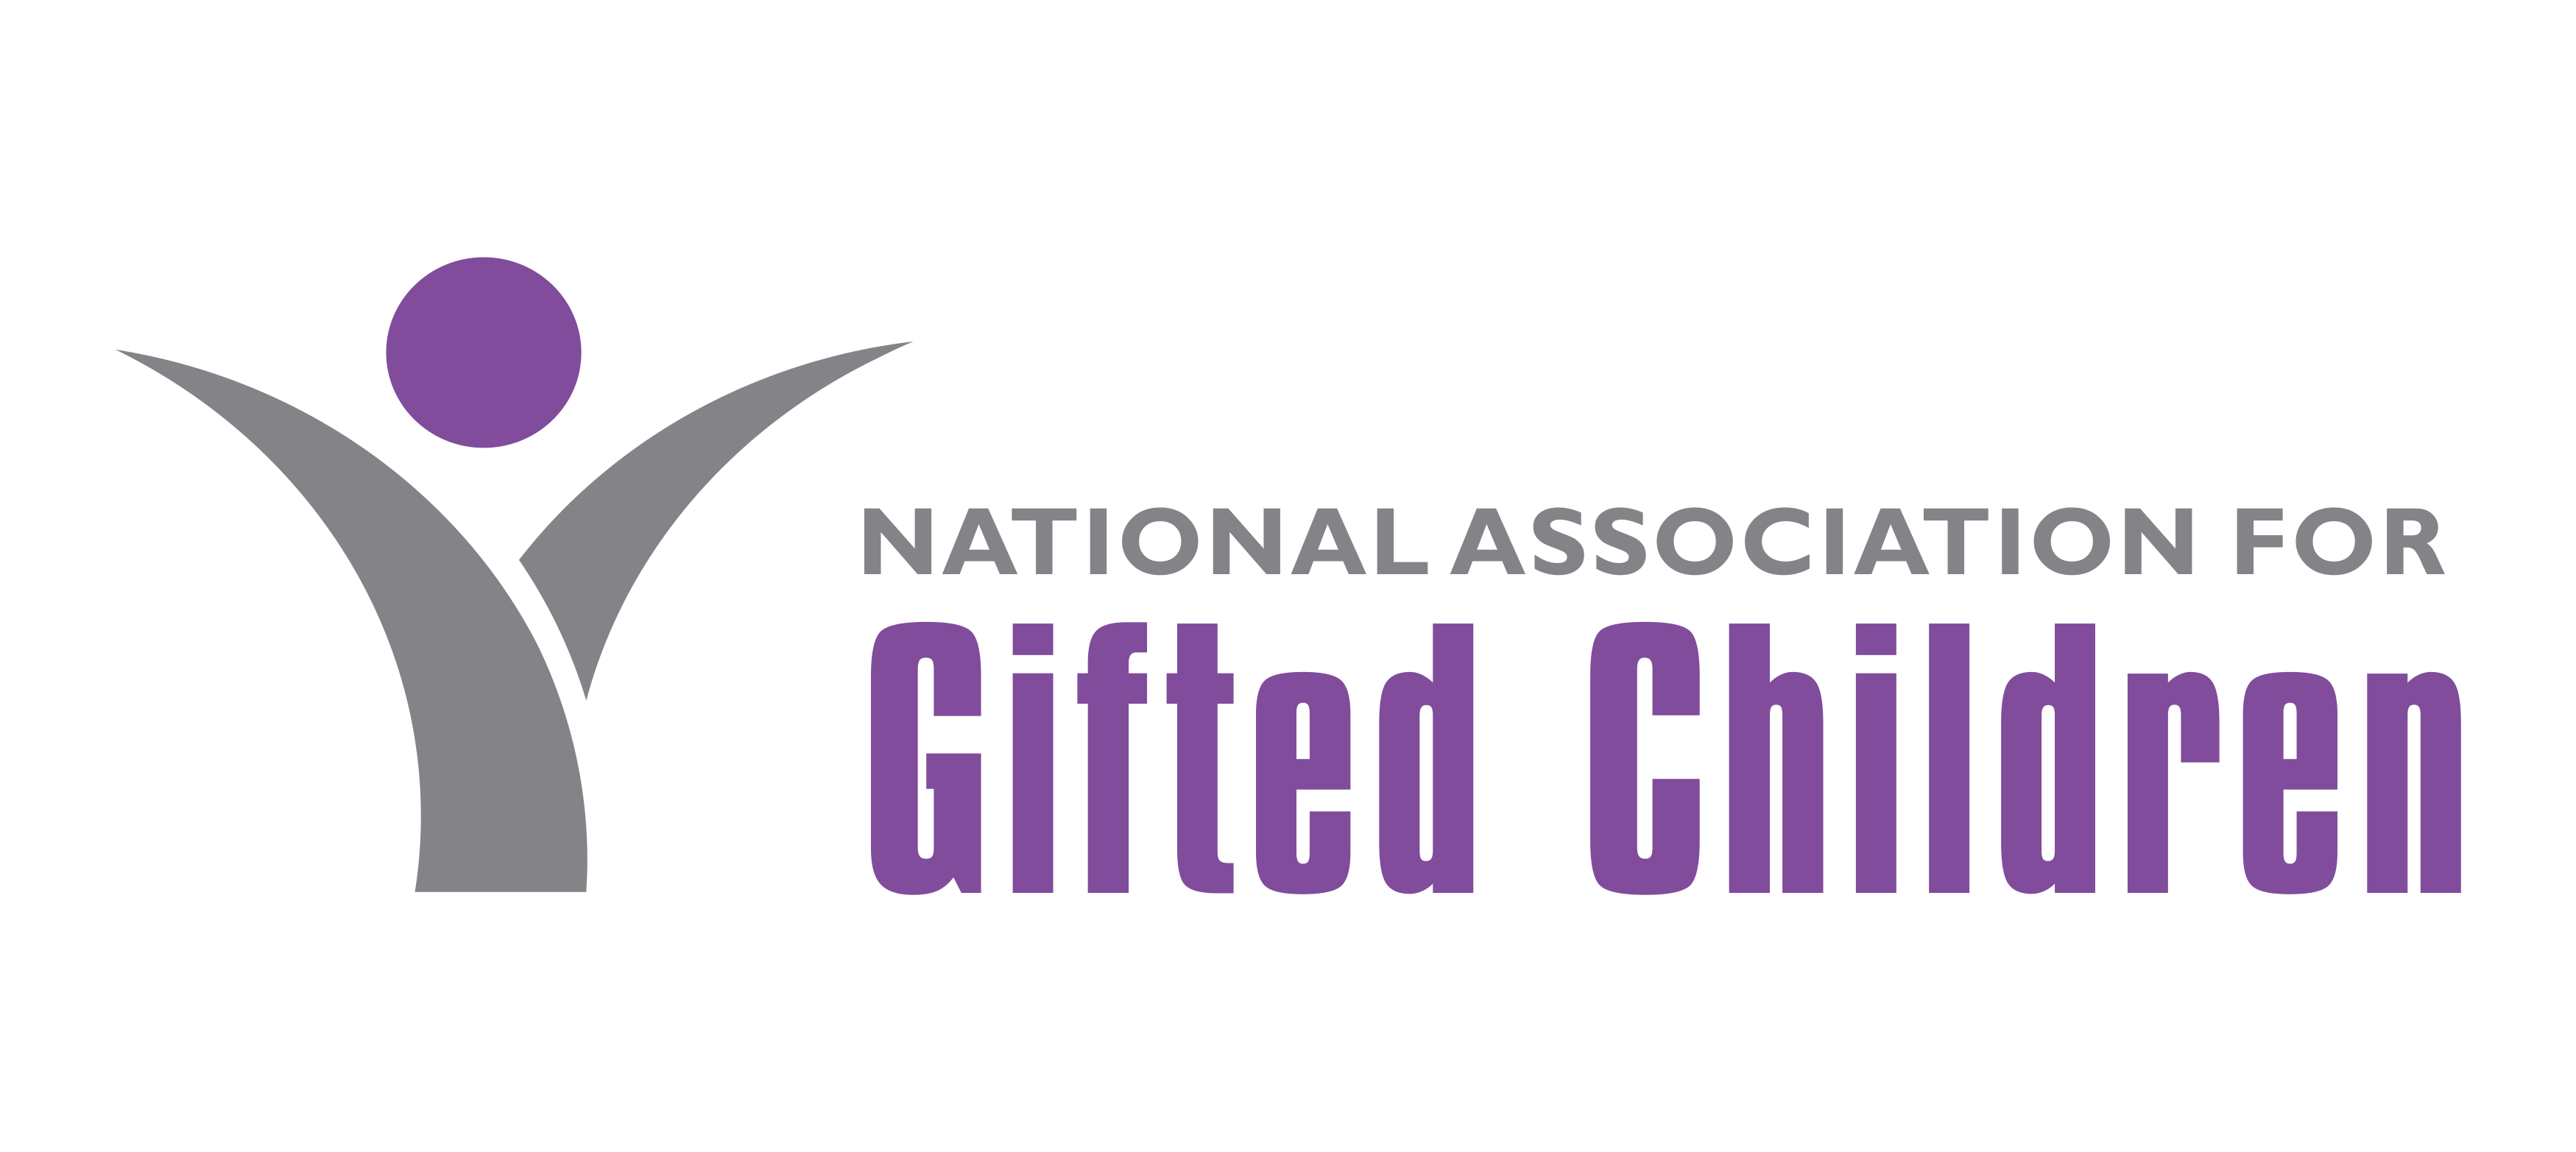 National Association for Gifted Children logo